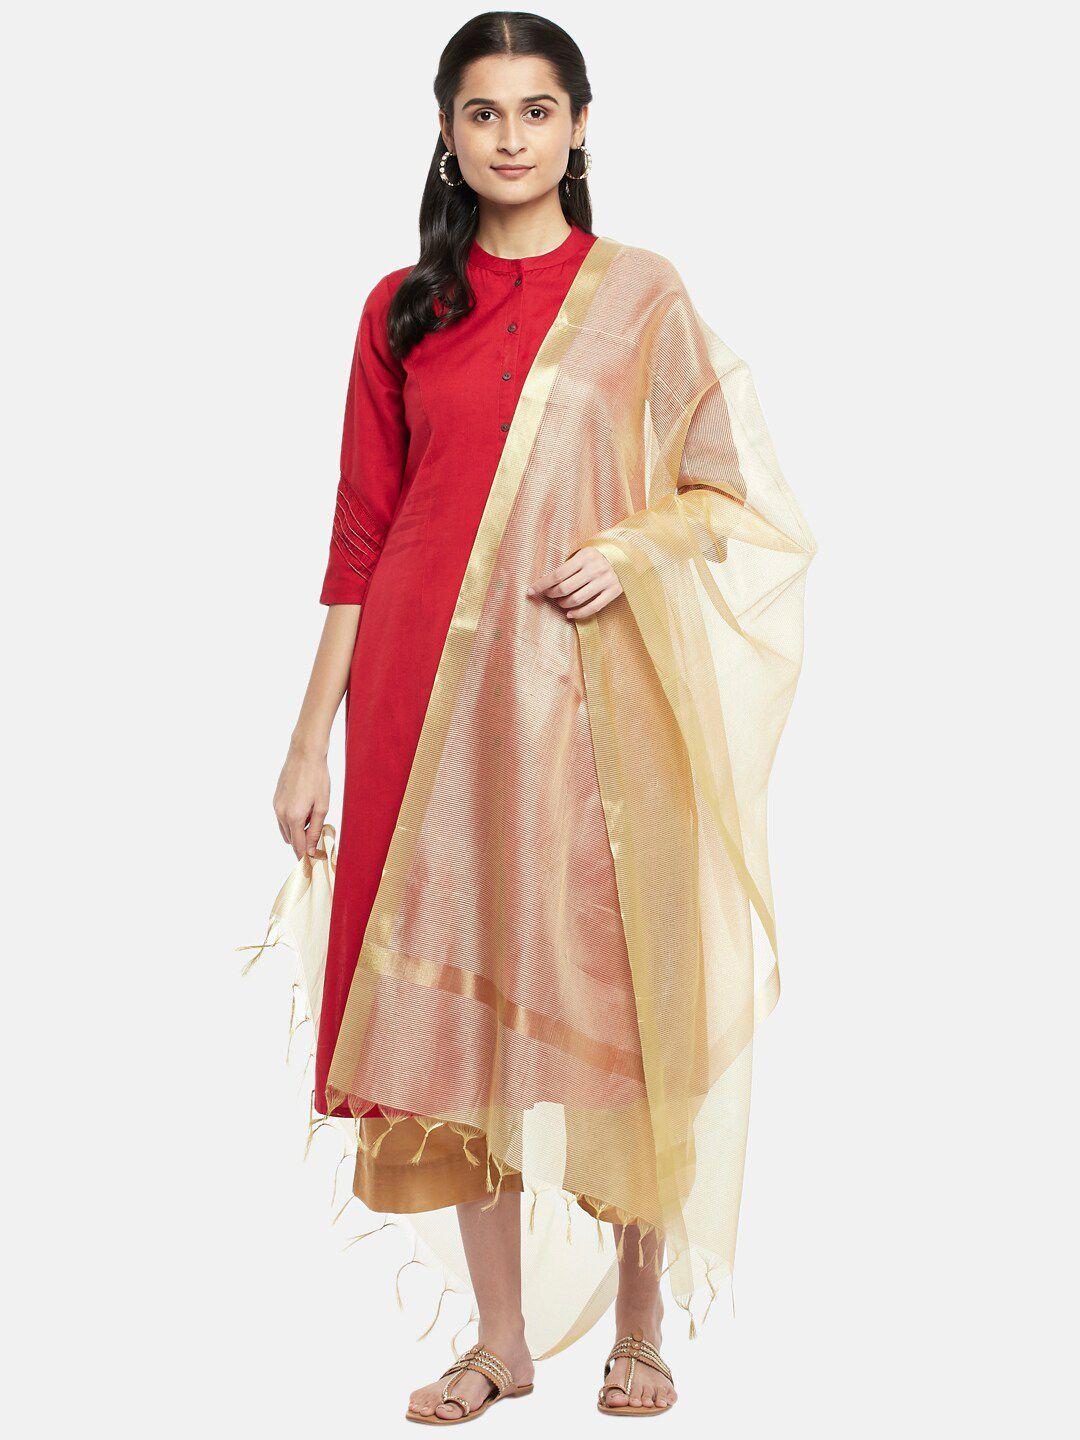 rangmanch by pantaloons gold-toned pure silk dupatta with zari